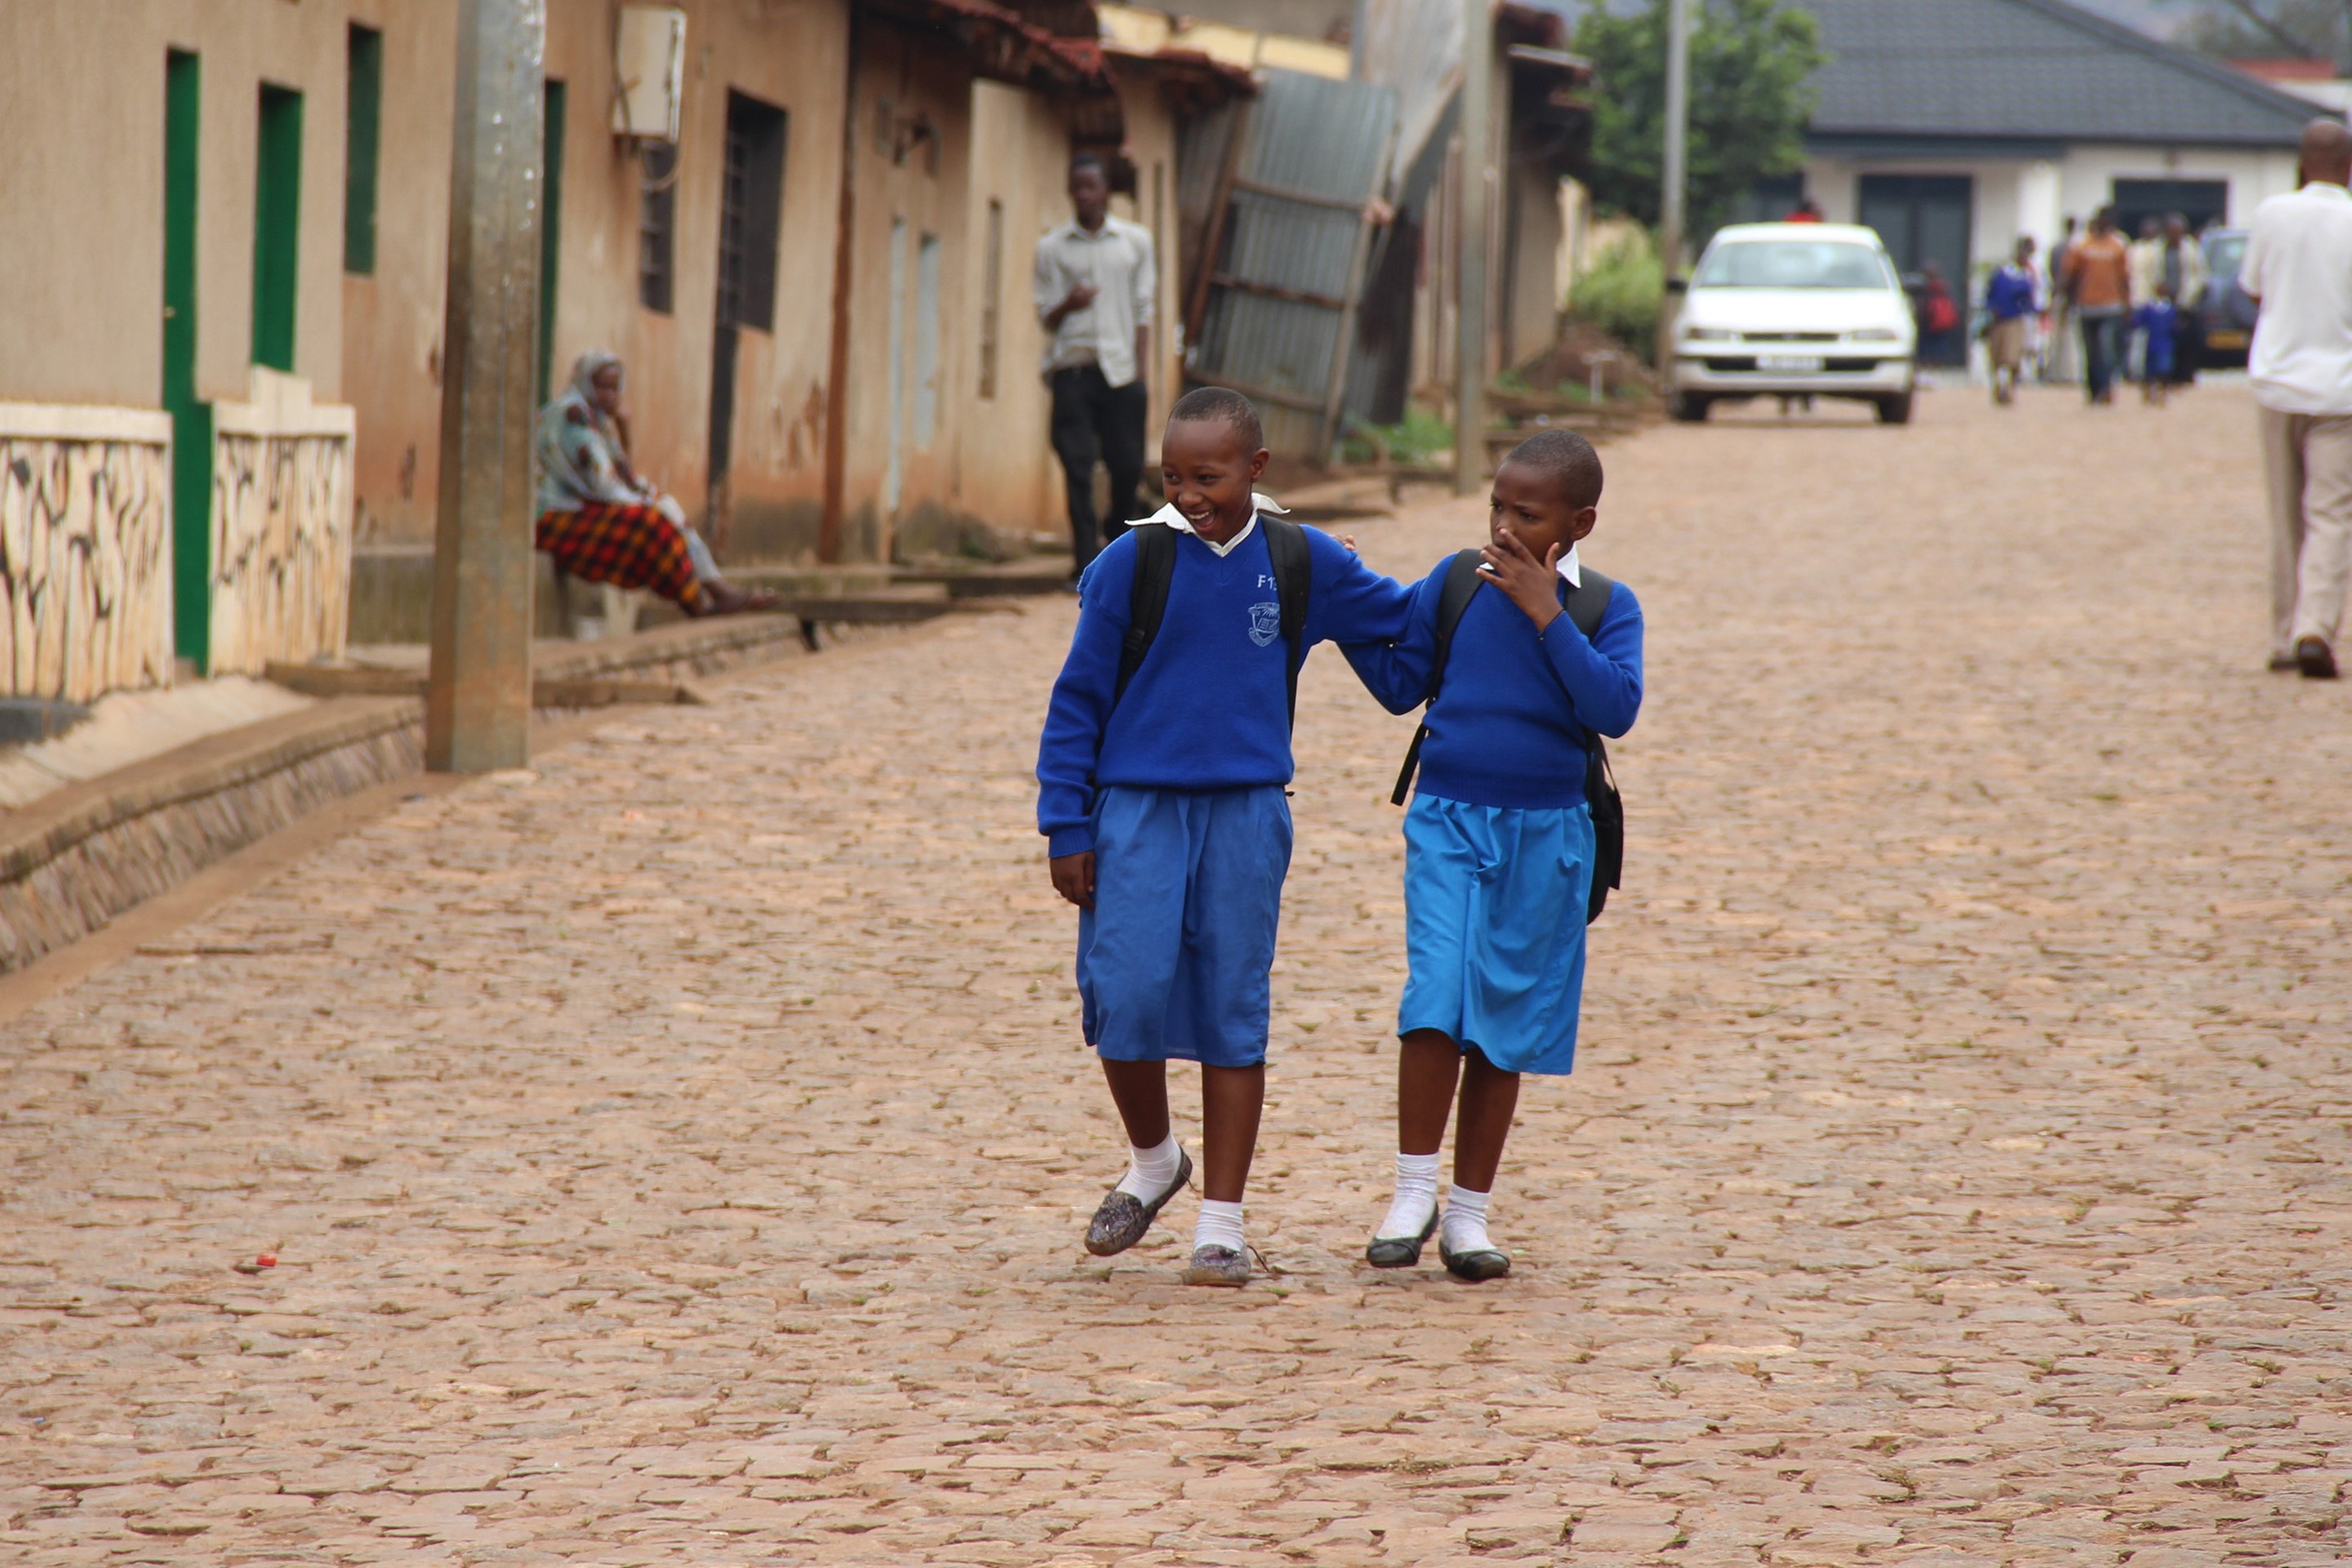 Shutterstock: KIGALI, RWANDA - CIRCA JULY 2016: Two young school girls in uniform on their way home after class.